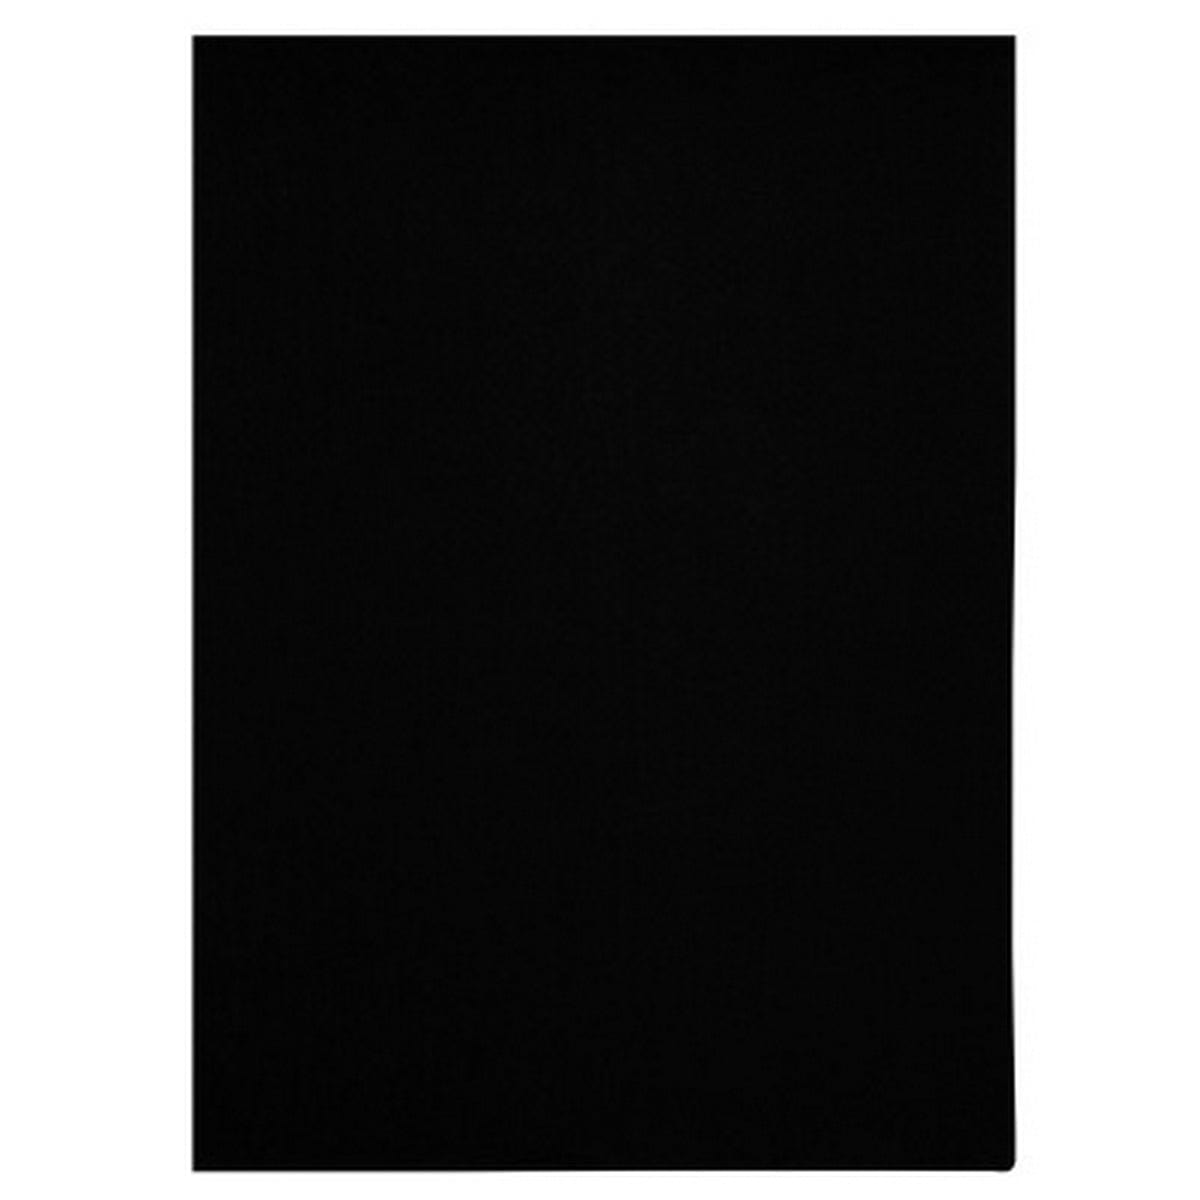 jags-mumbai Non-Woven & Felt Sheets A4 Nonwoven Felt Sheet Black ANFSBK129